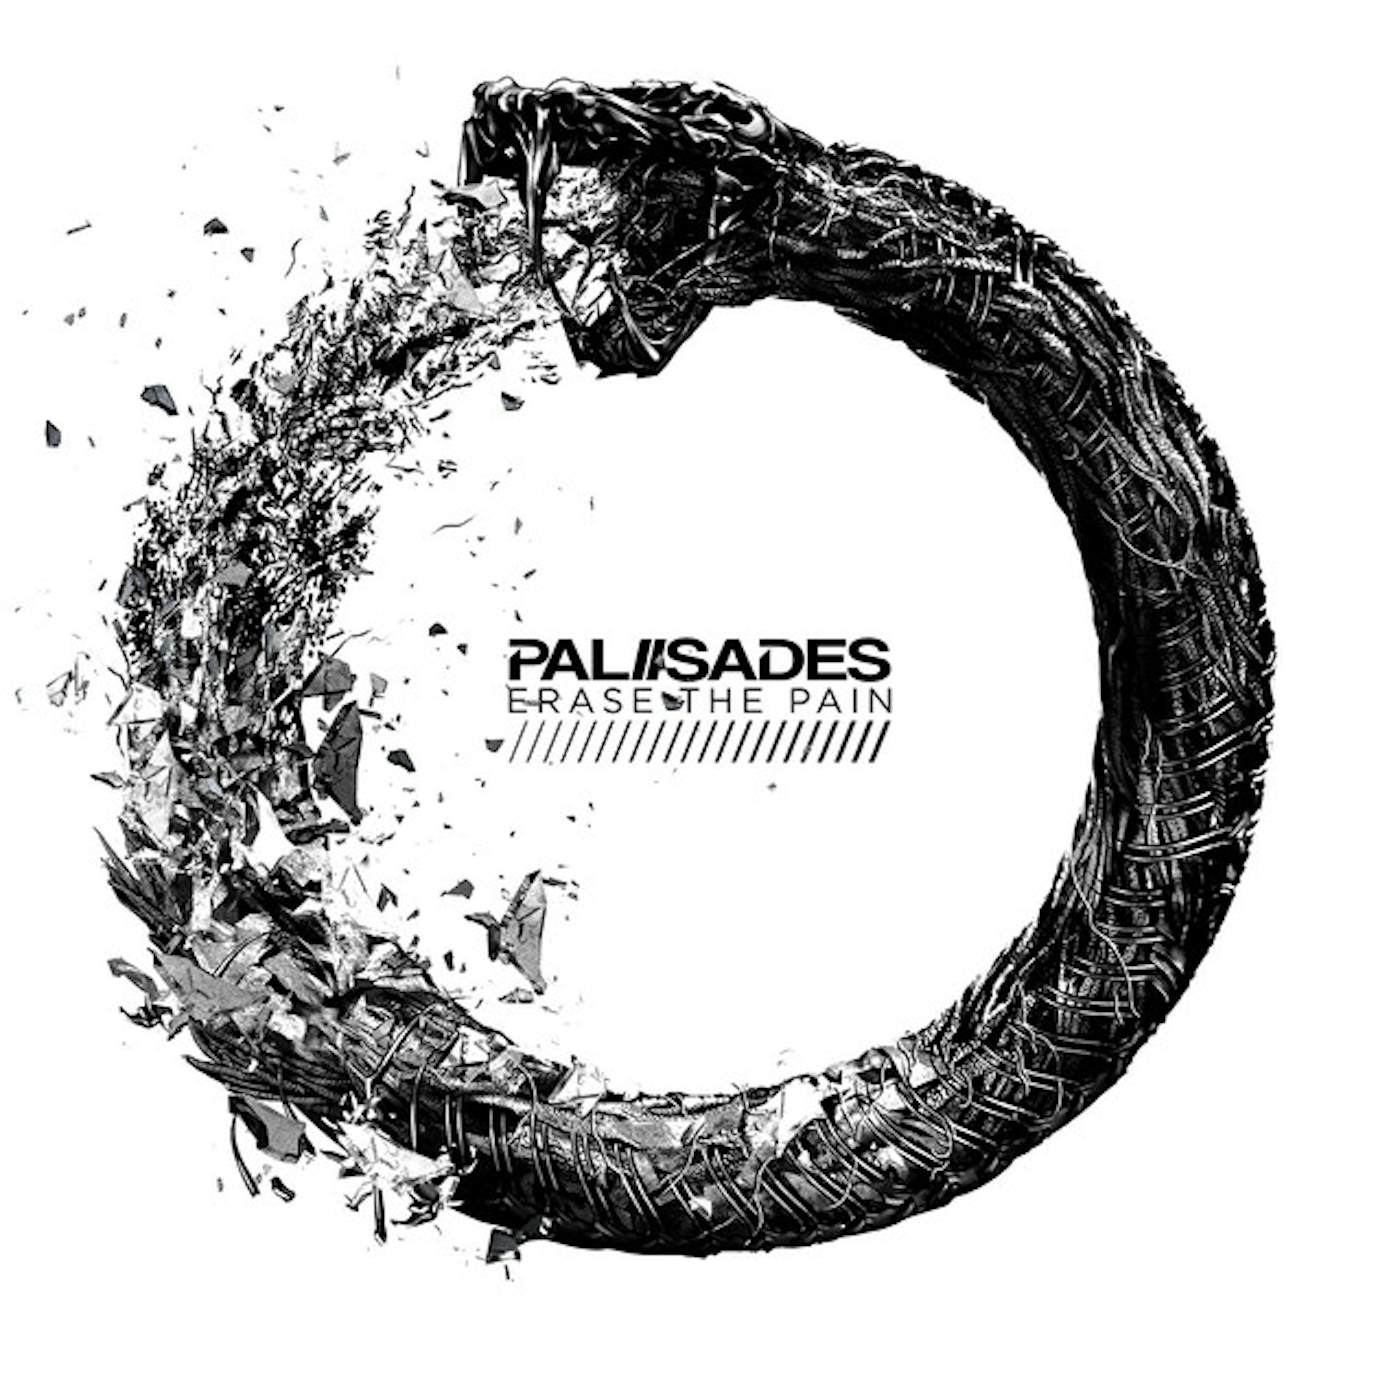 Palisades Erase The Pain Vinyl Record